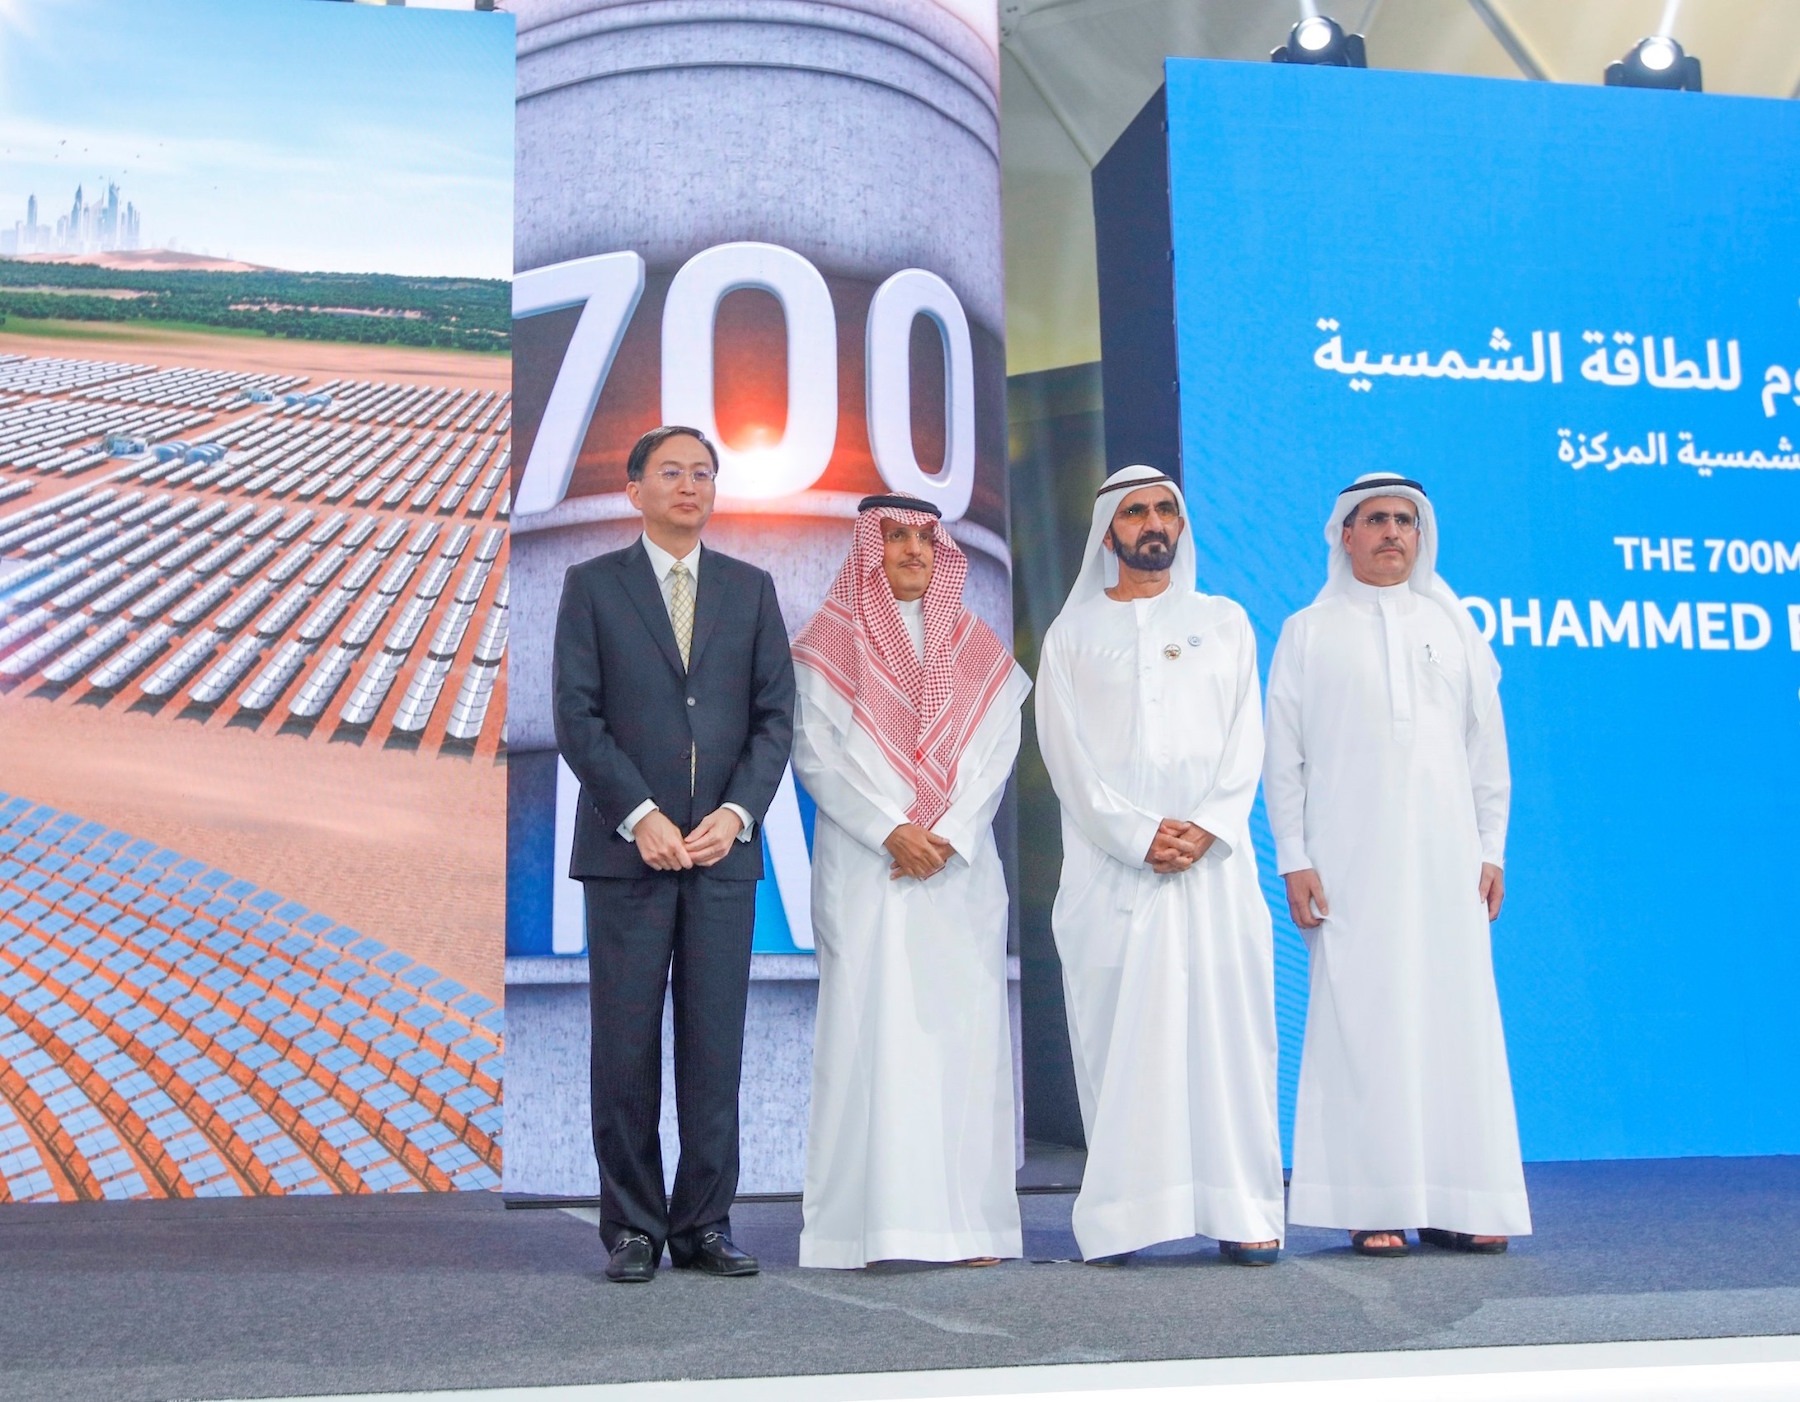 Shanghai Electric CSP starts sending overnight solar power to Dubai grid